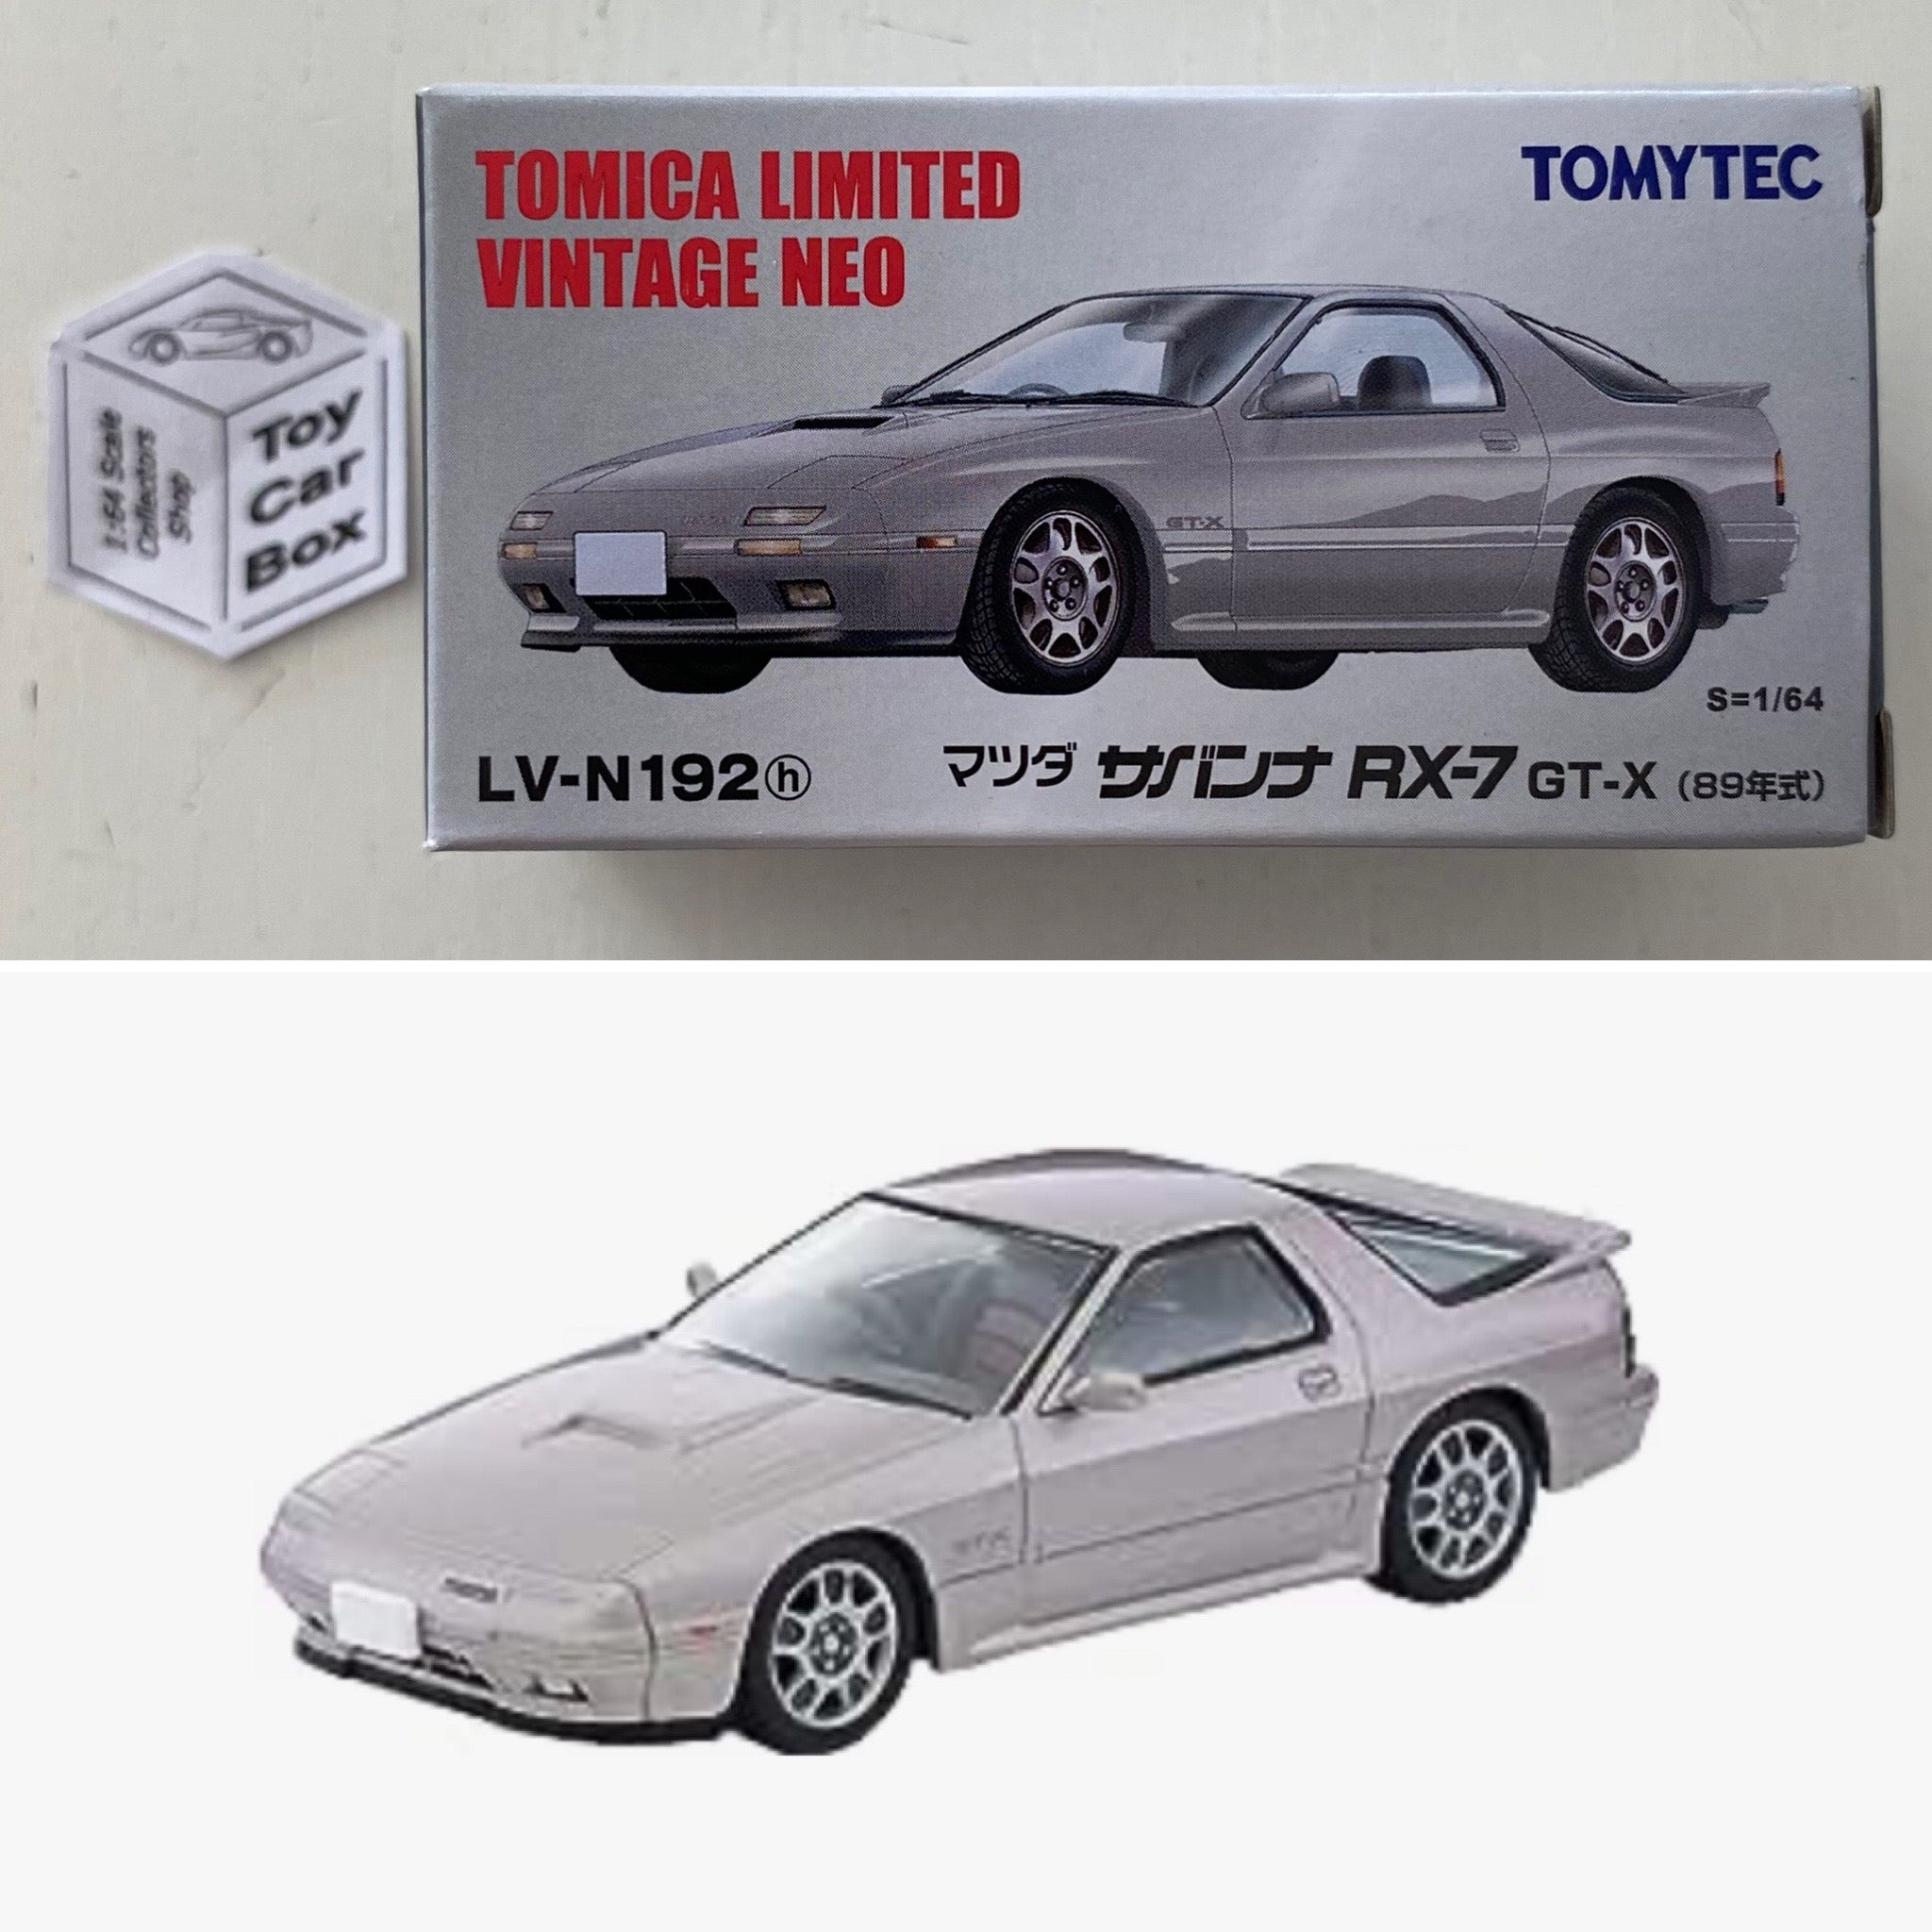 TOMICA Limited Vintage Neo - ‘89 Mazda RX-7 GT-X (1/64 - Grey #LV-N192h)  BH14